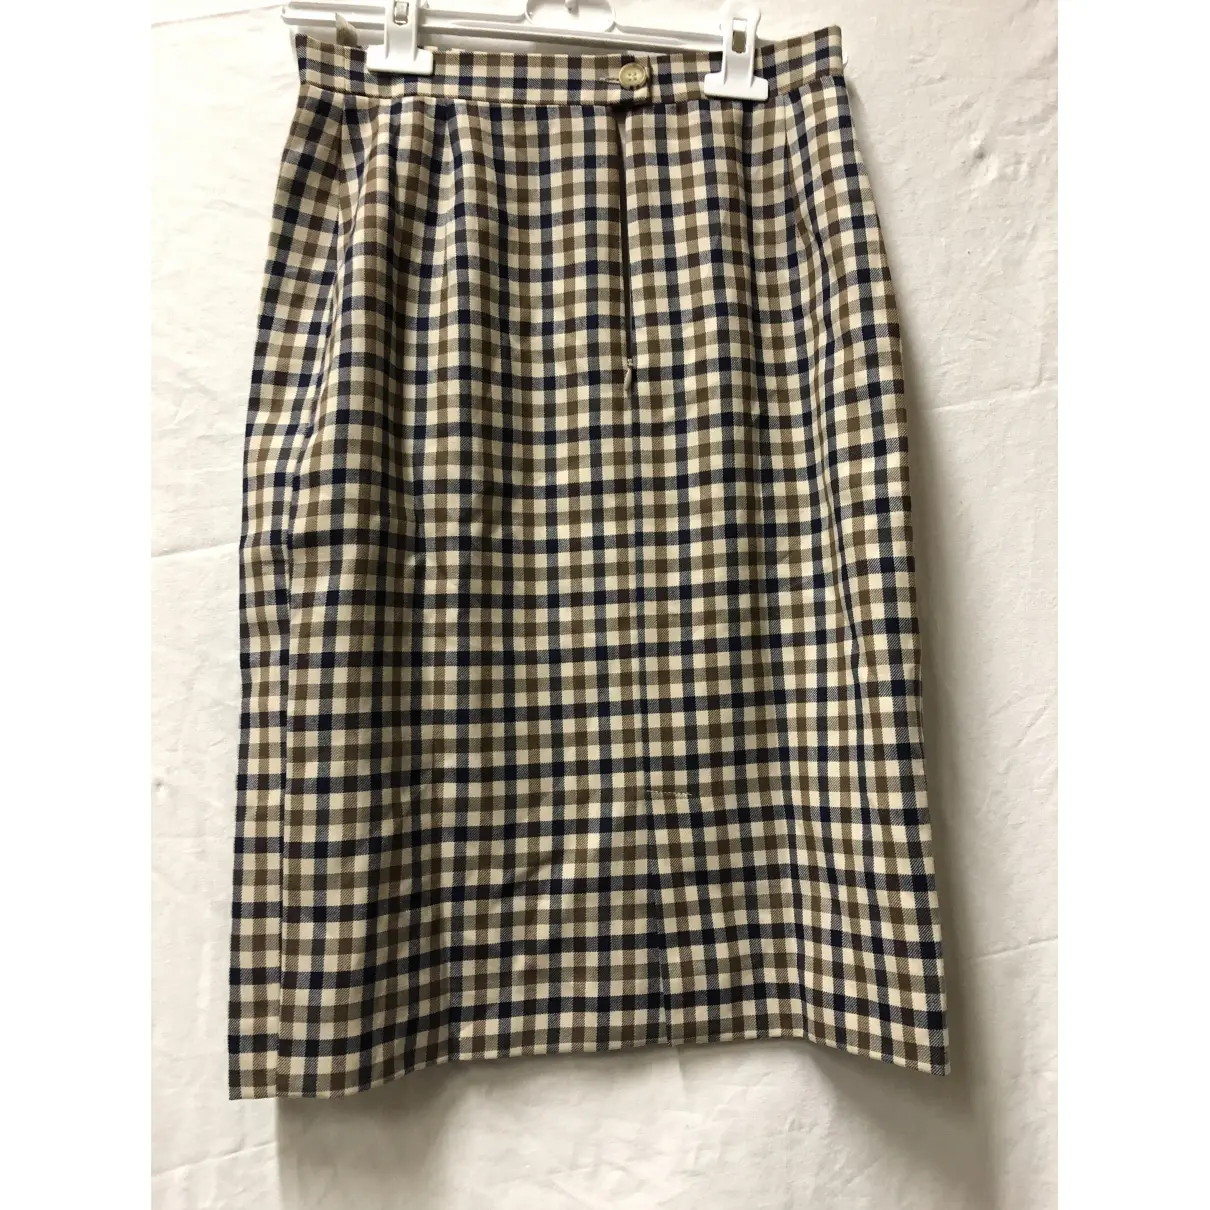 Aquascutum Wool skirt suit for sale - Vintage